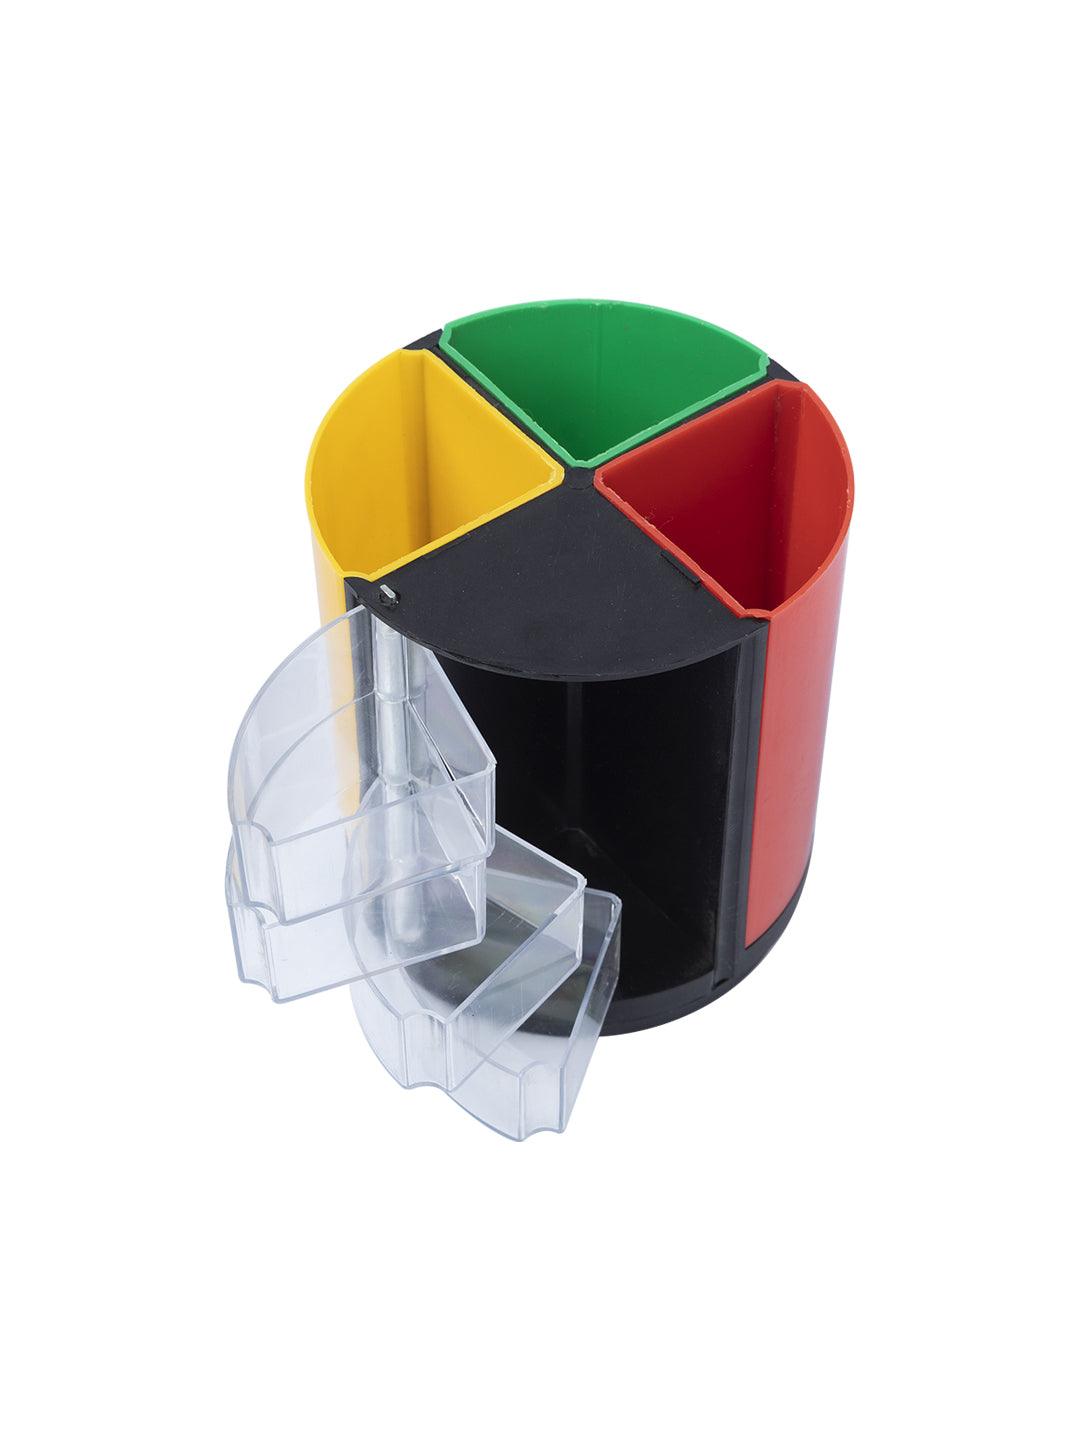 Multicolour Pen holder with 4 Compartments - MARKET 99